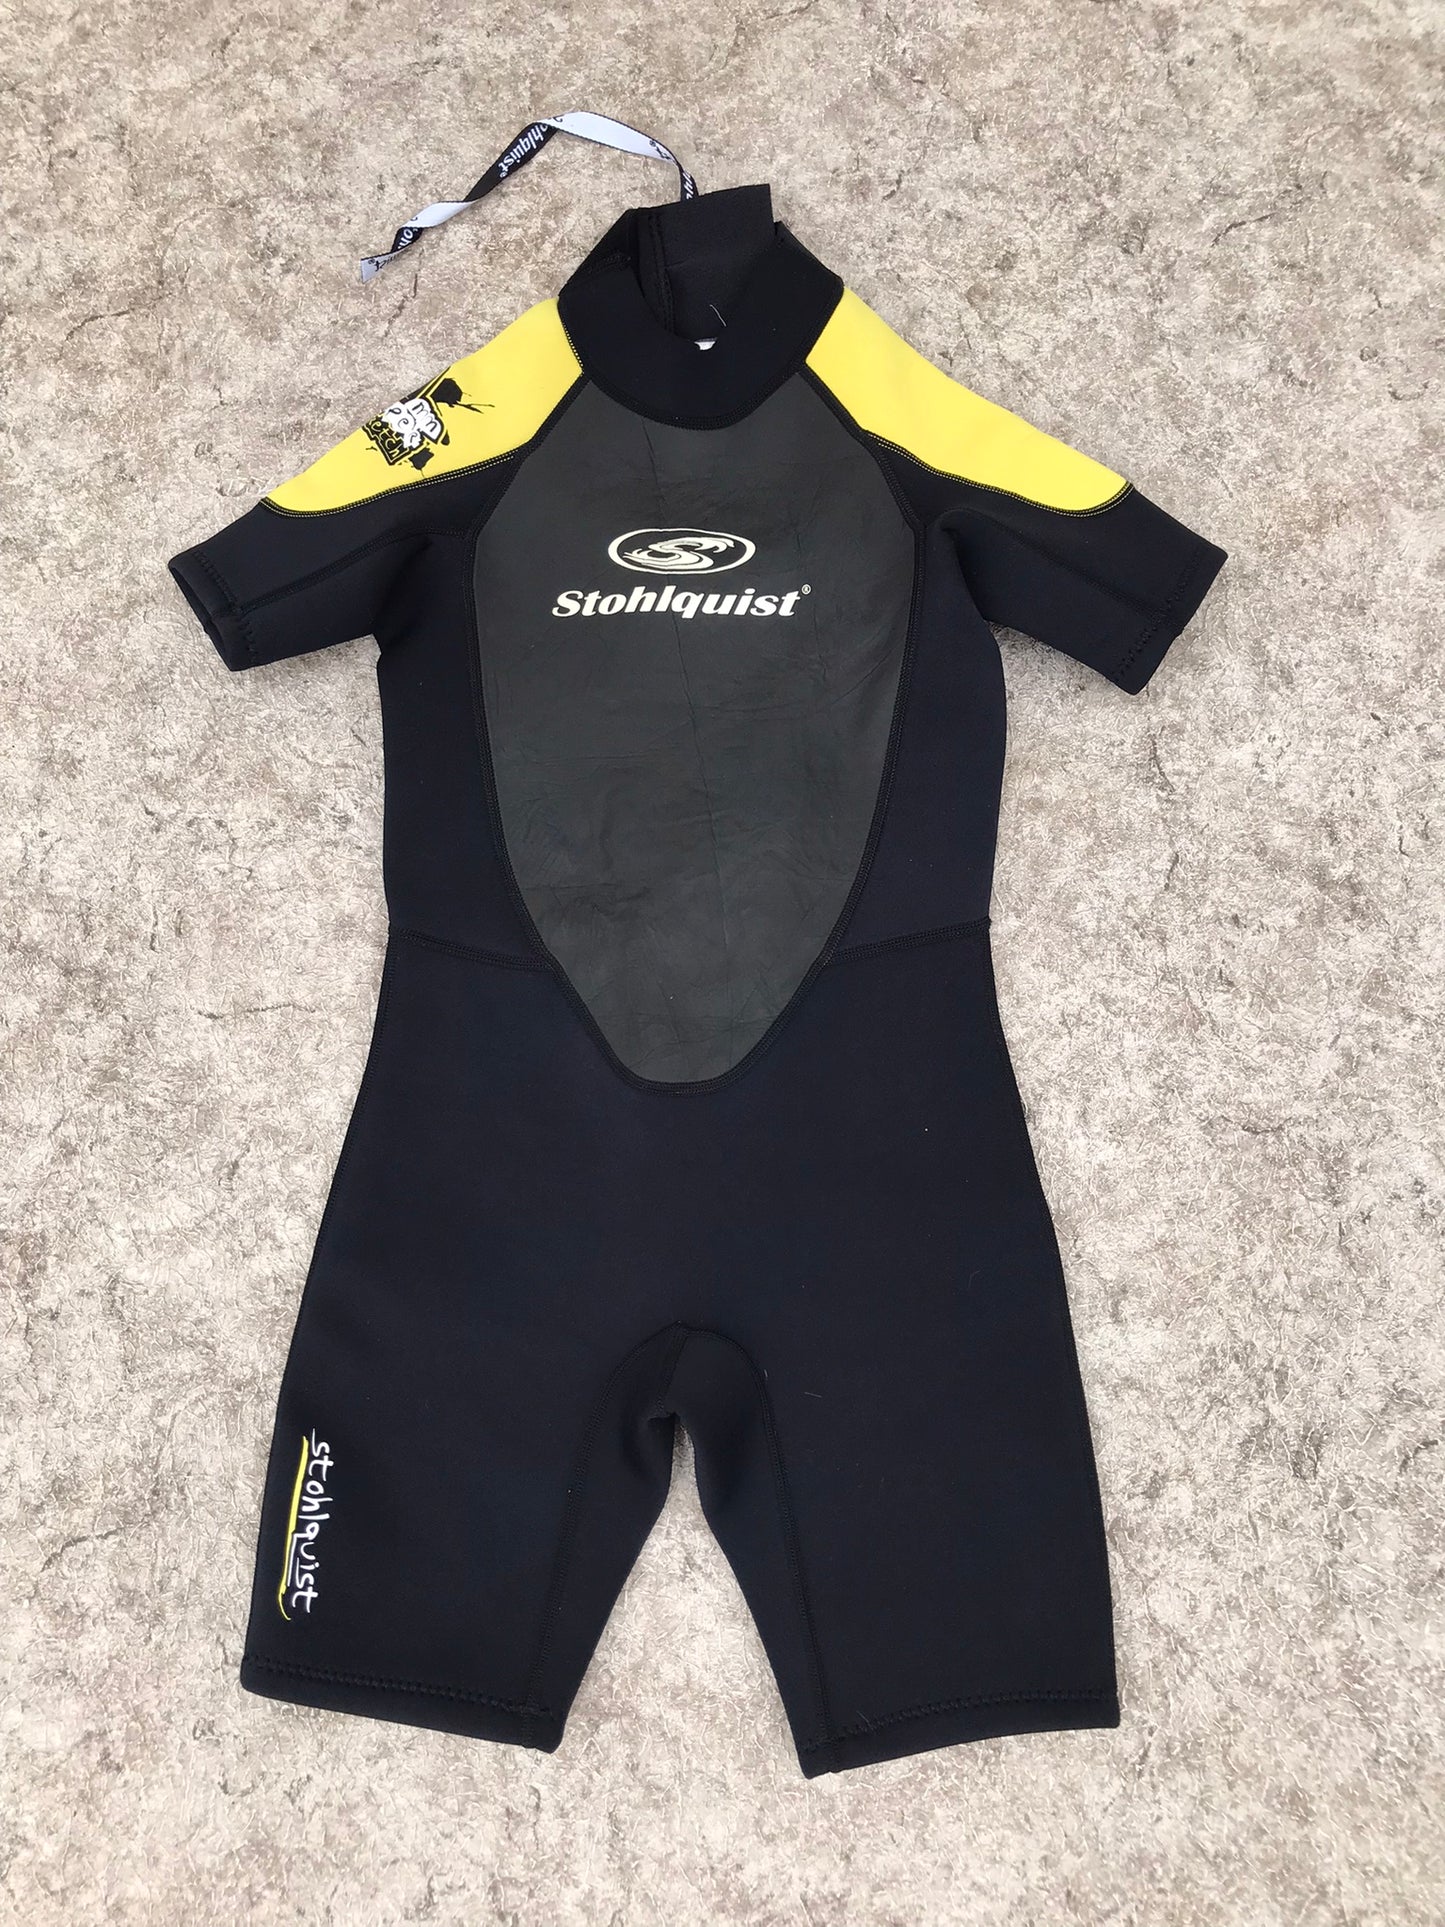 Wetsuit Child Size 7-8 Stohlquist Black Yellow 2-3 mm Neoprene